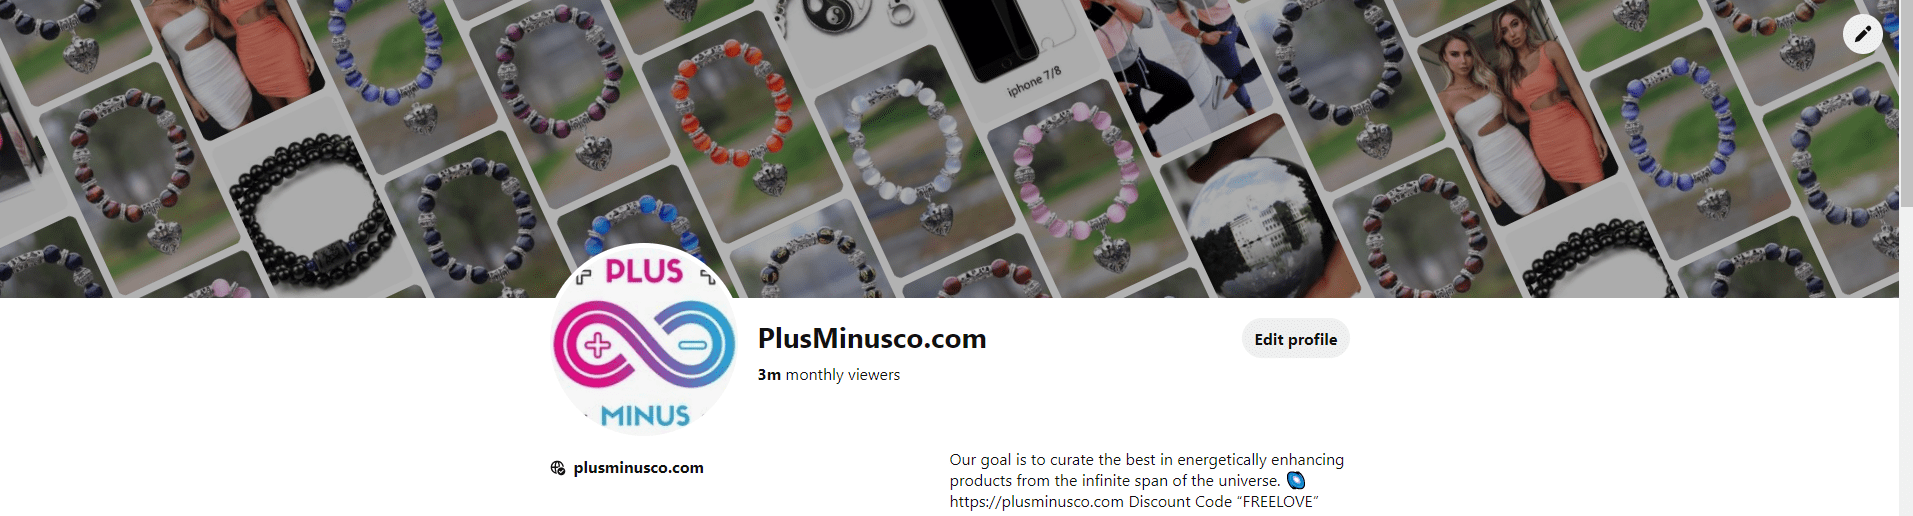 Браслети - plusminusco.com